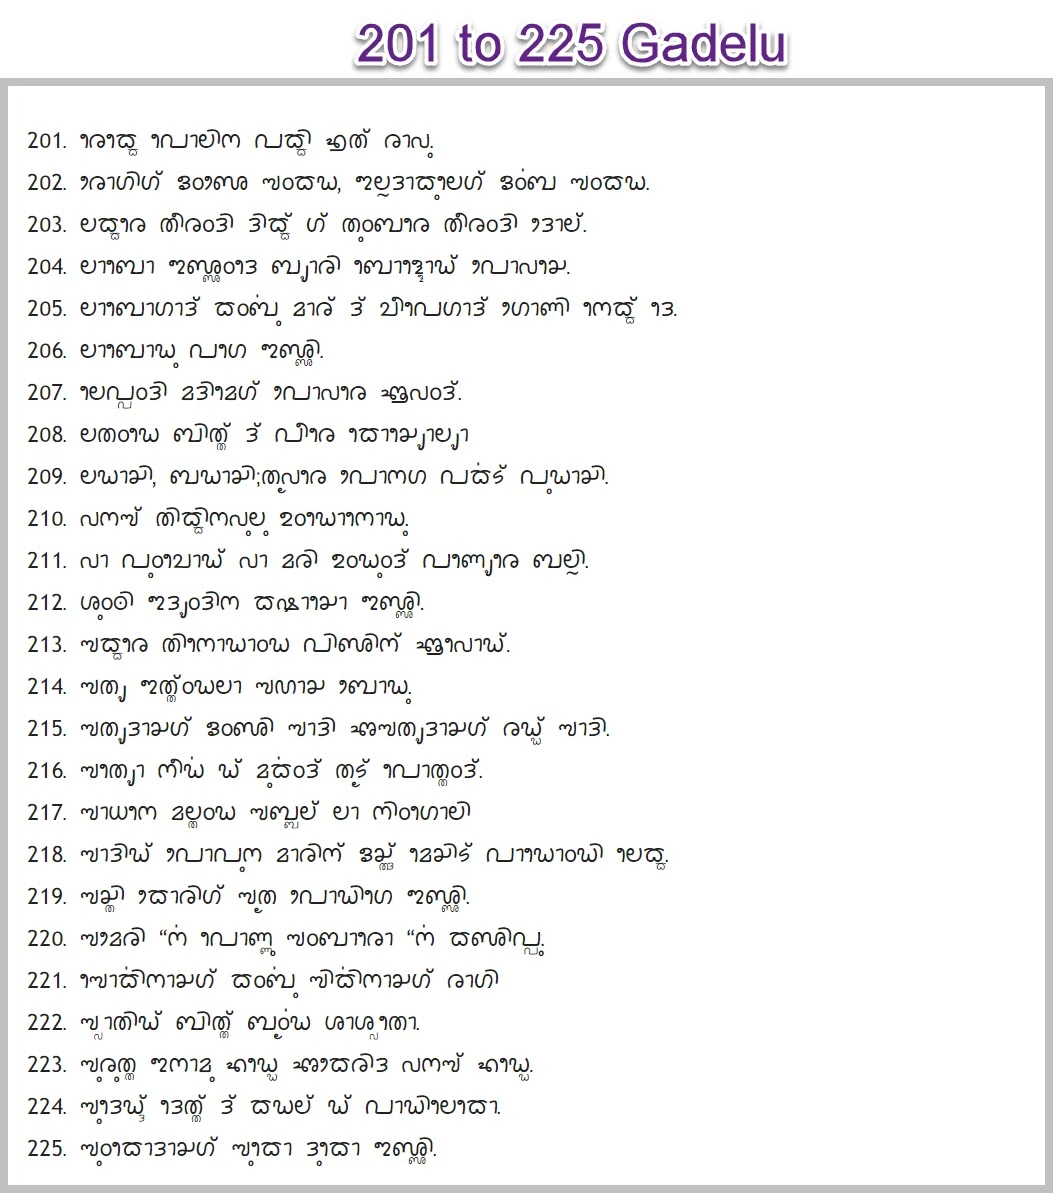 201 to 225 Tulu Gadelu in Tulu Script